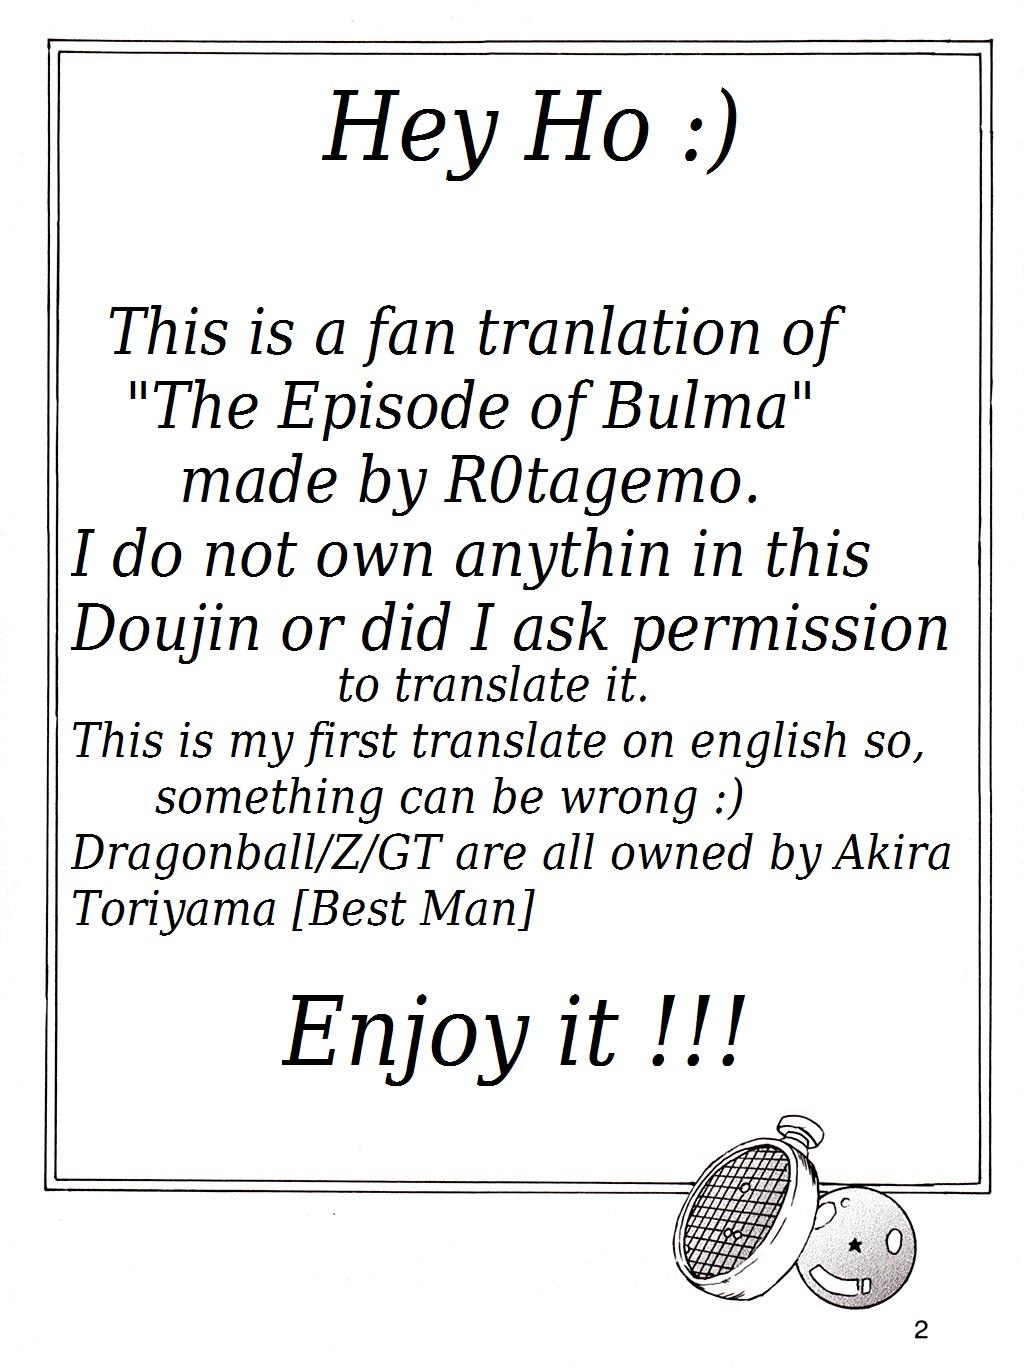 Dragon Ball EB 1 - Episode of Bulma 2